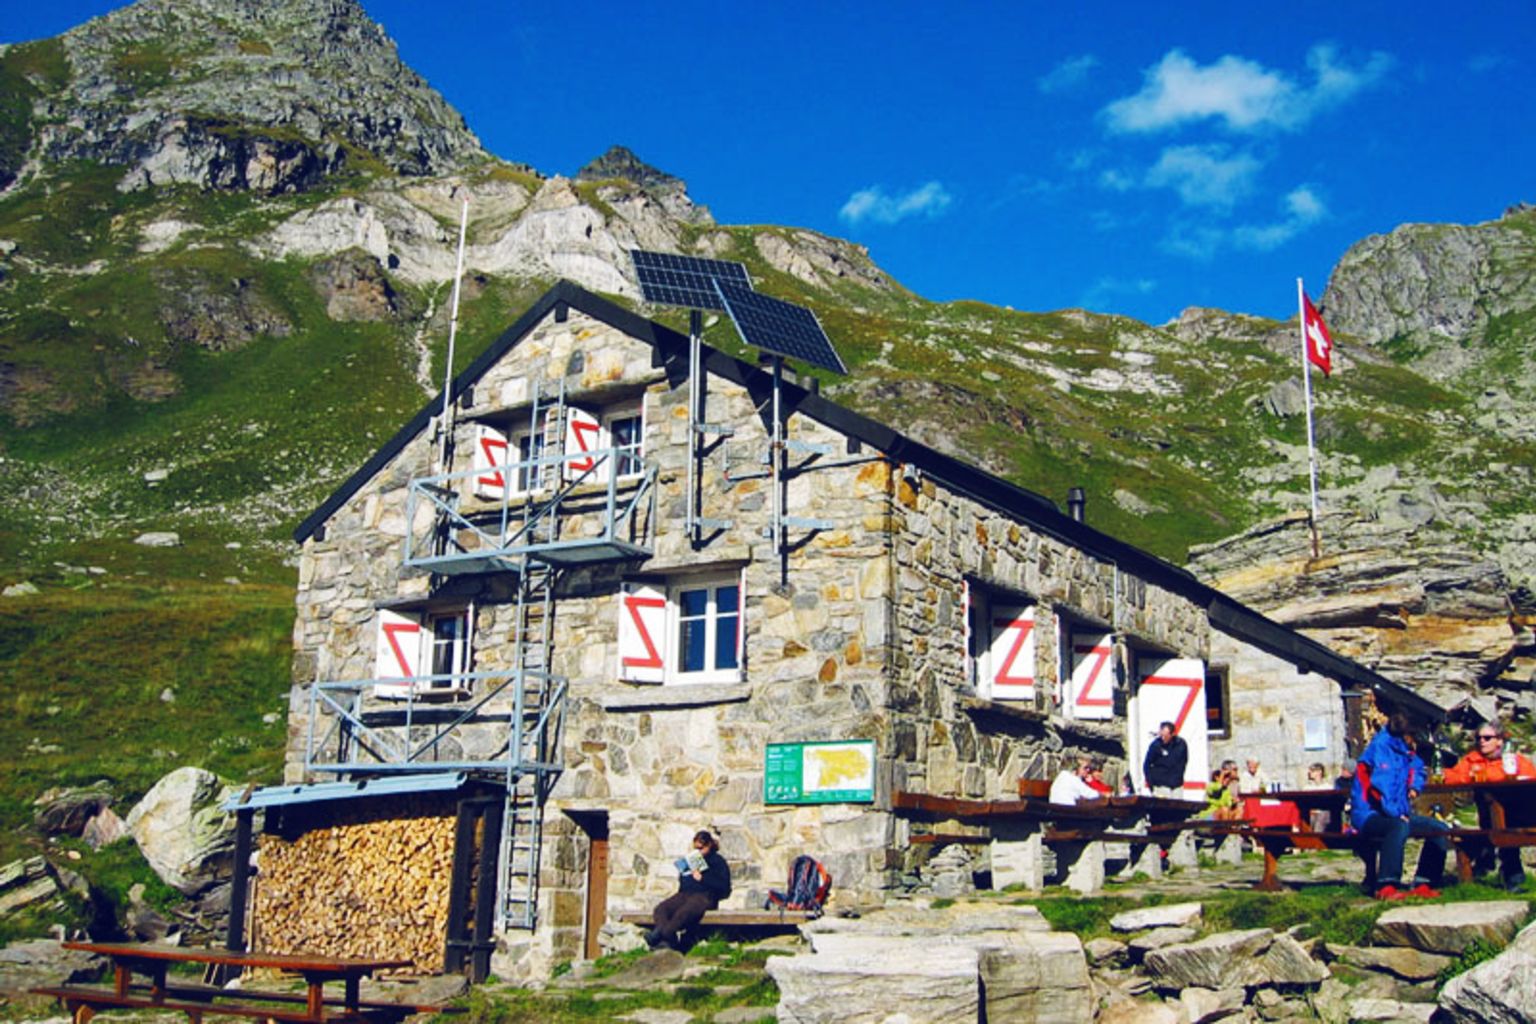 SAC, Valais, hut, valley of binn, nature, outdoor, panorama